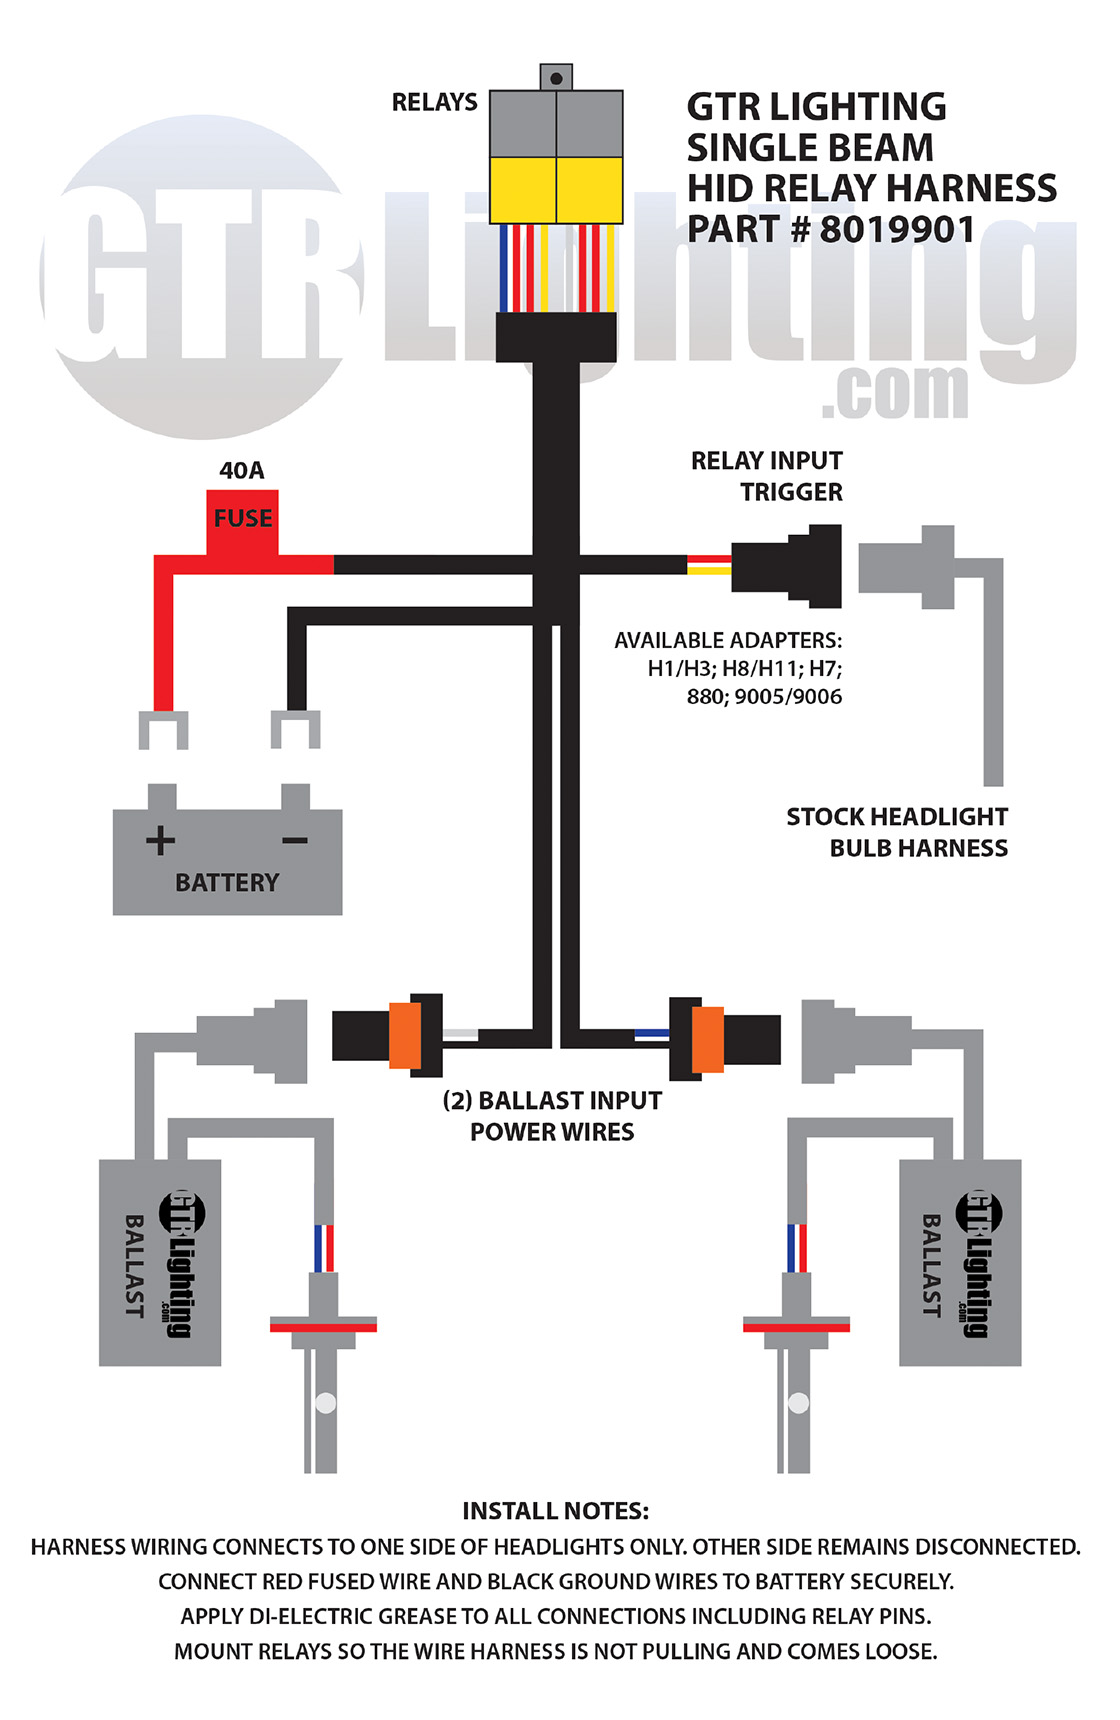 https://blog.headlightrevolution.com/hubfs/5relay-harness-diagram.jpg#keepProtocol